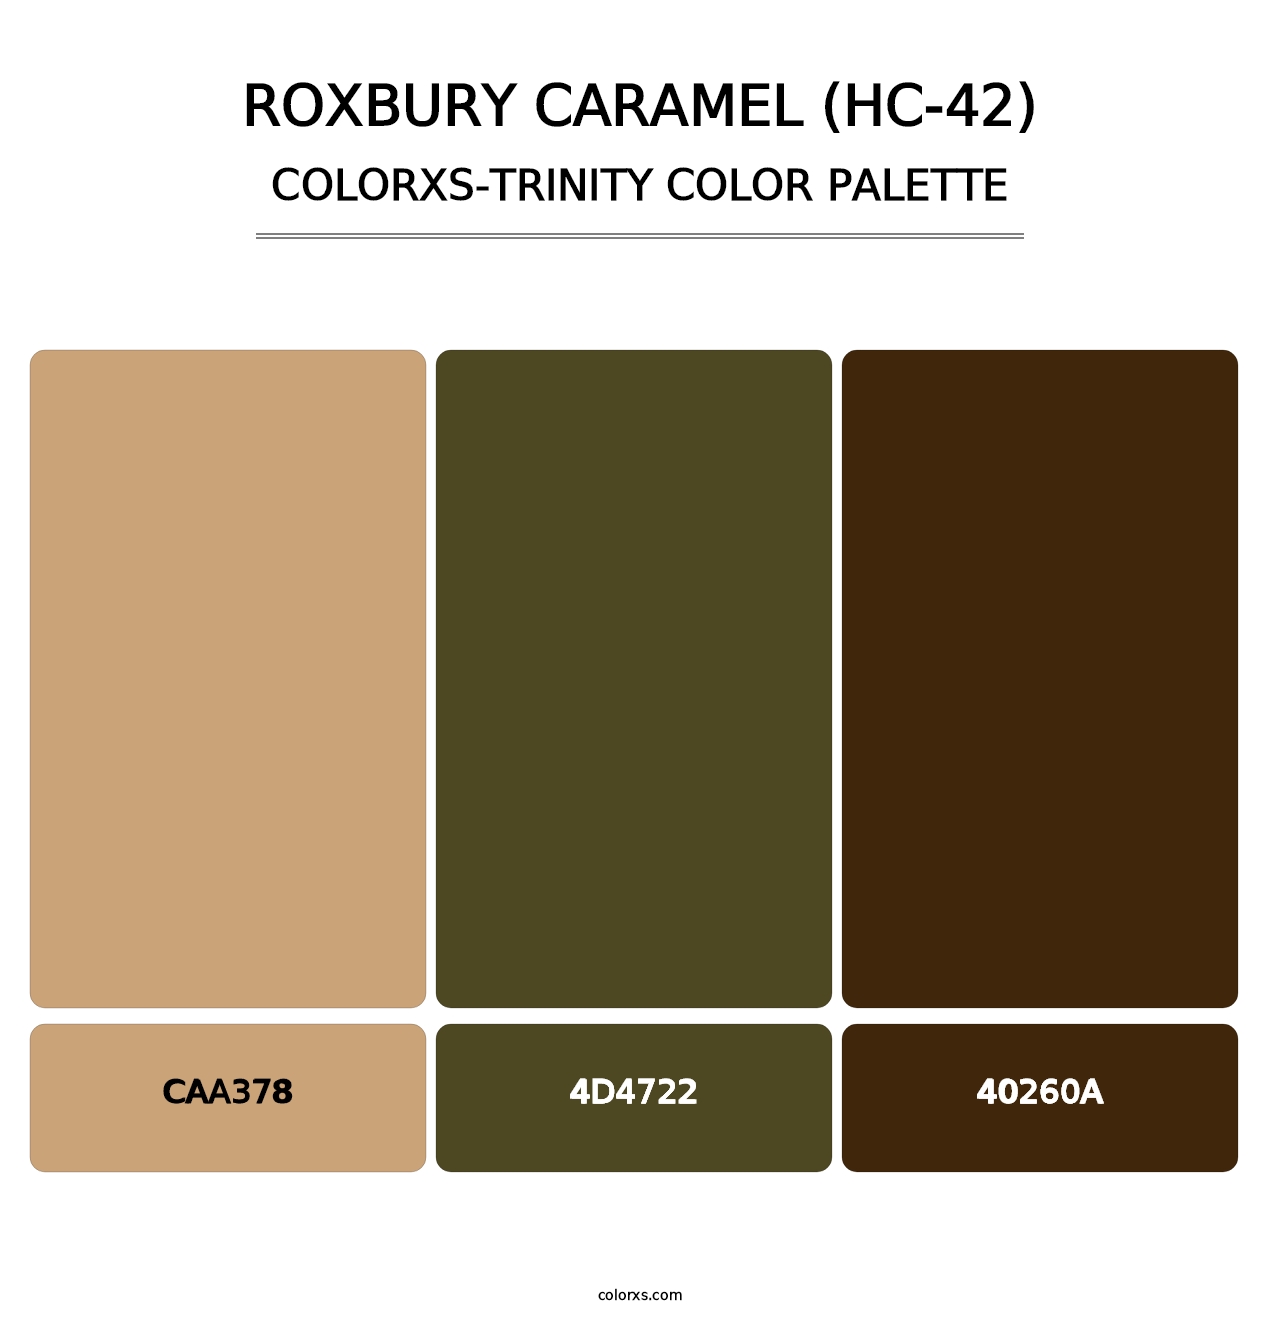 Roxbury Caramel (HC-42) - Colorxs Trinity Palette